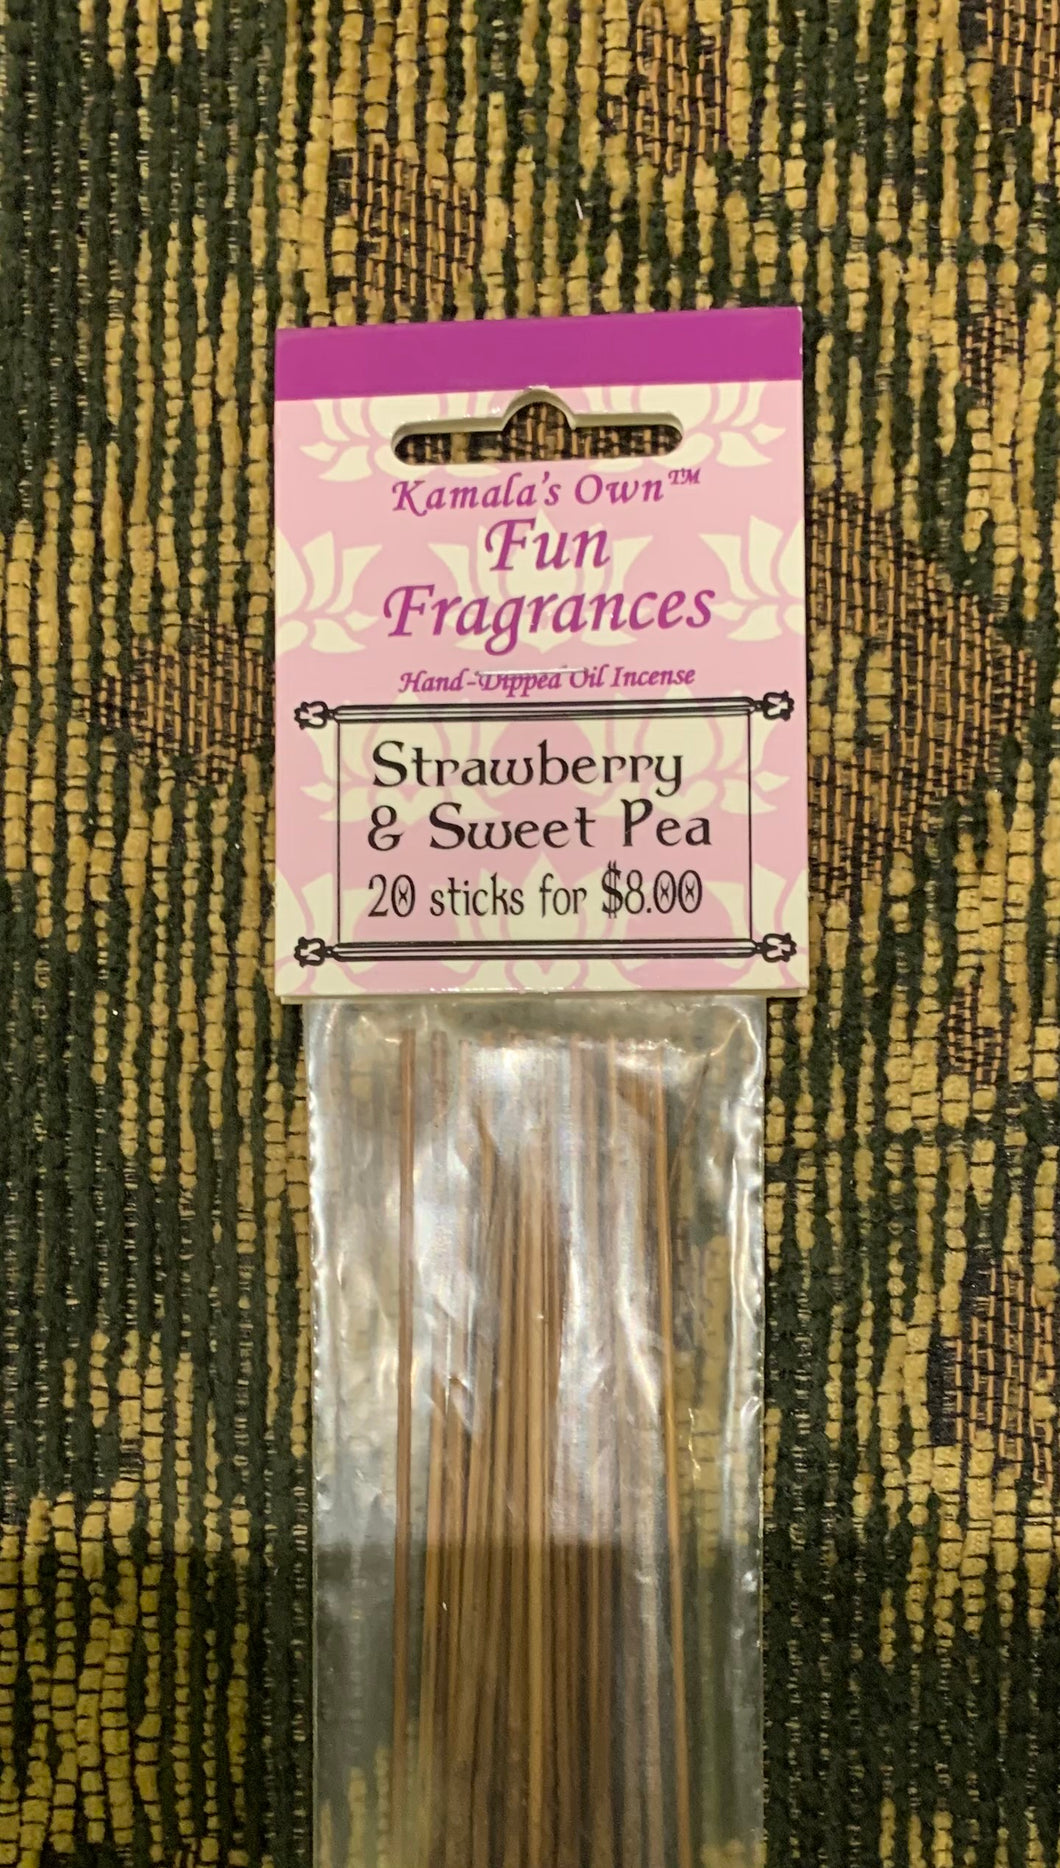 Strawberry & Sweet Pea incense sticks